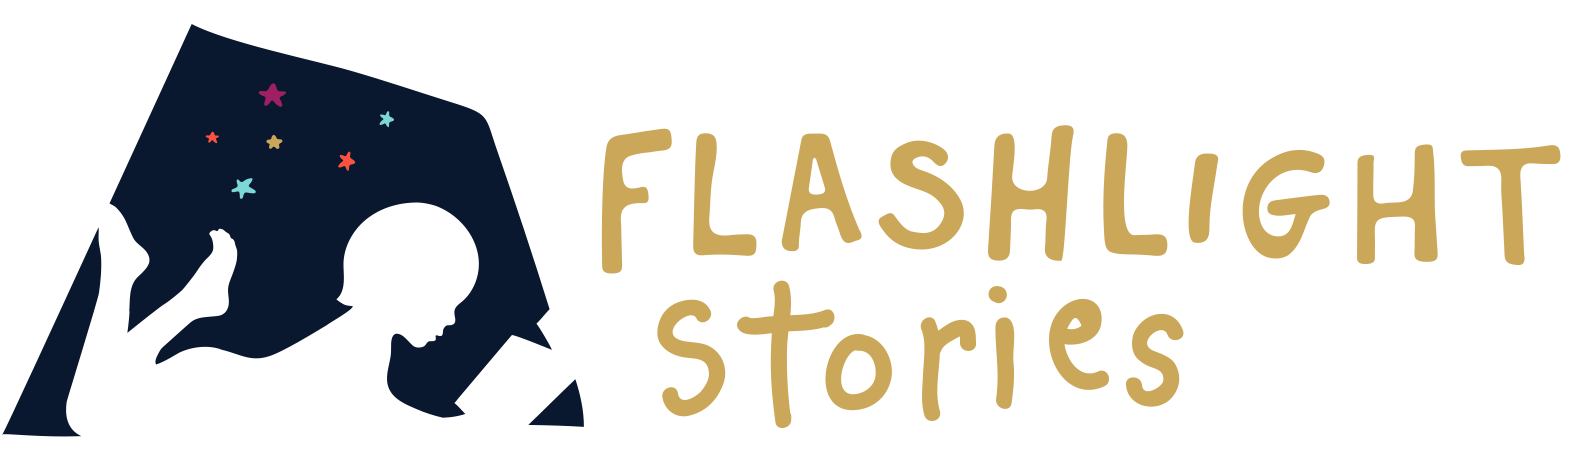 Flashlight Stories